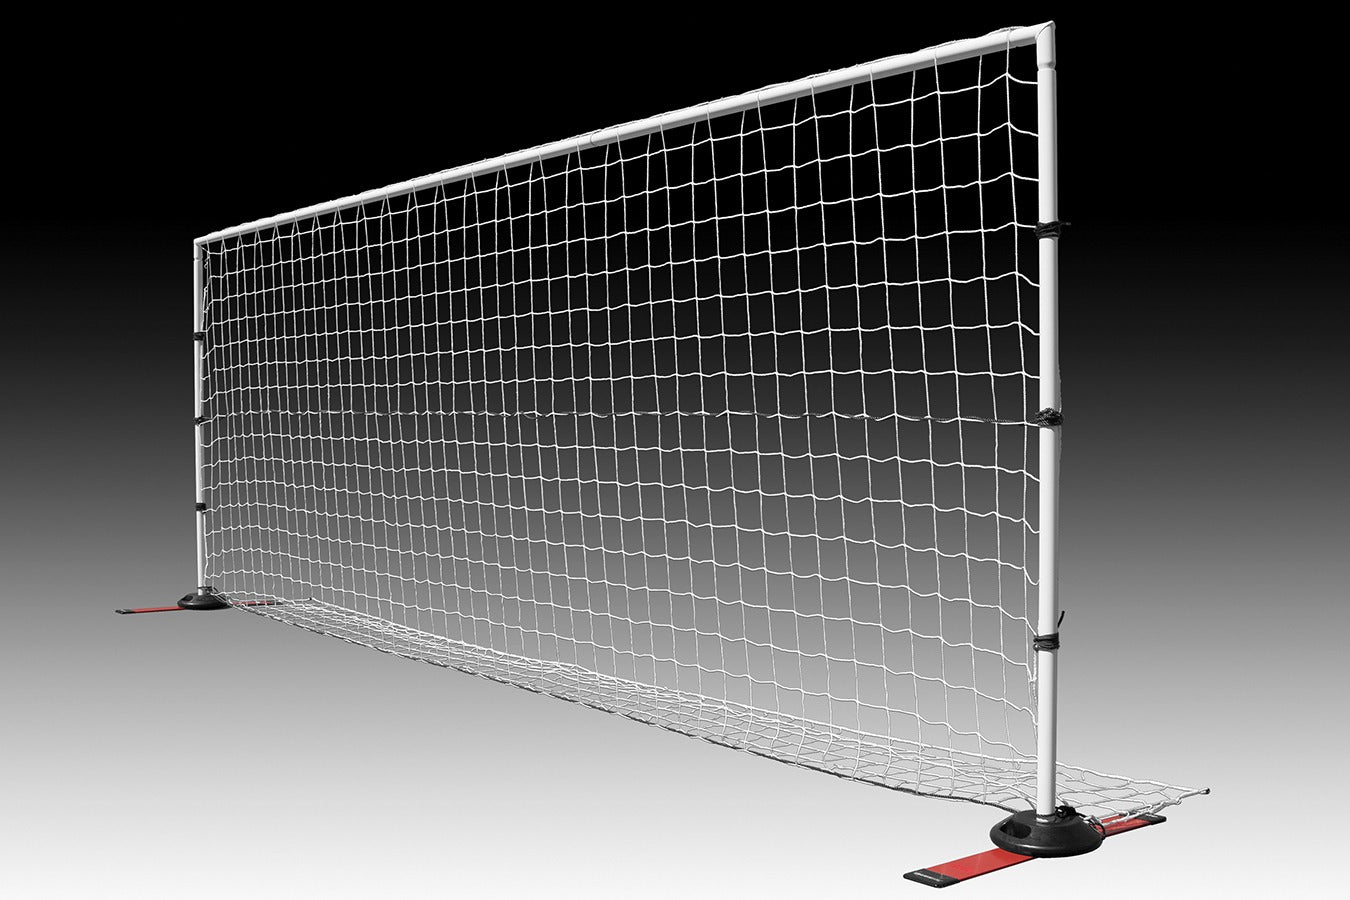 Kwik Goal NXT, Coerver® All-Surface Training Frame 8' x 24'